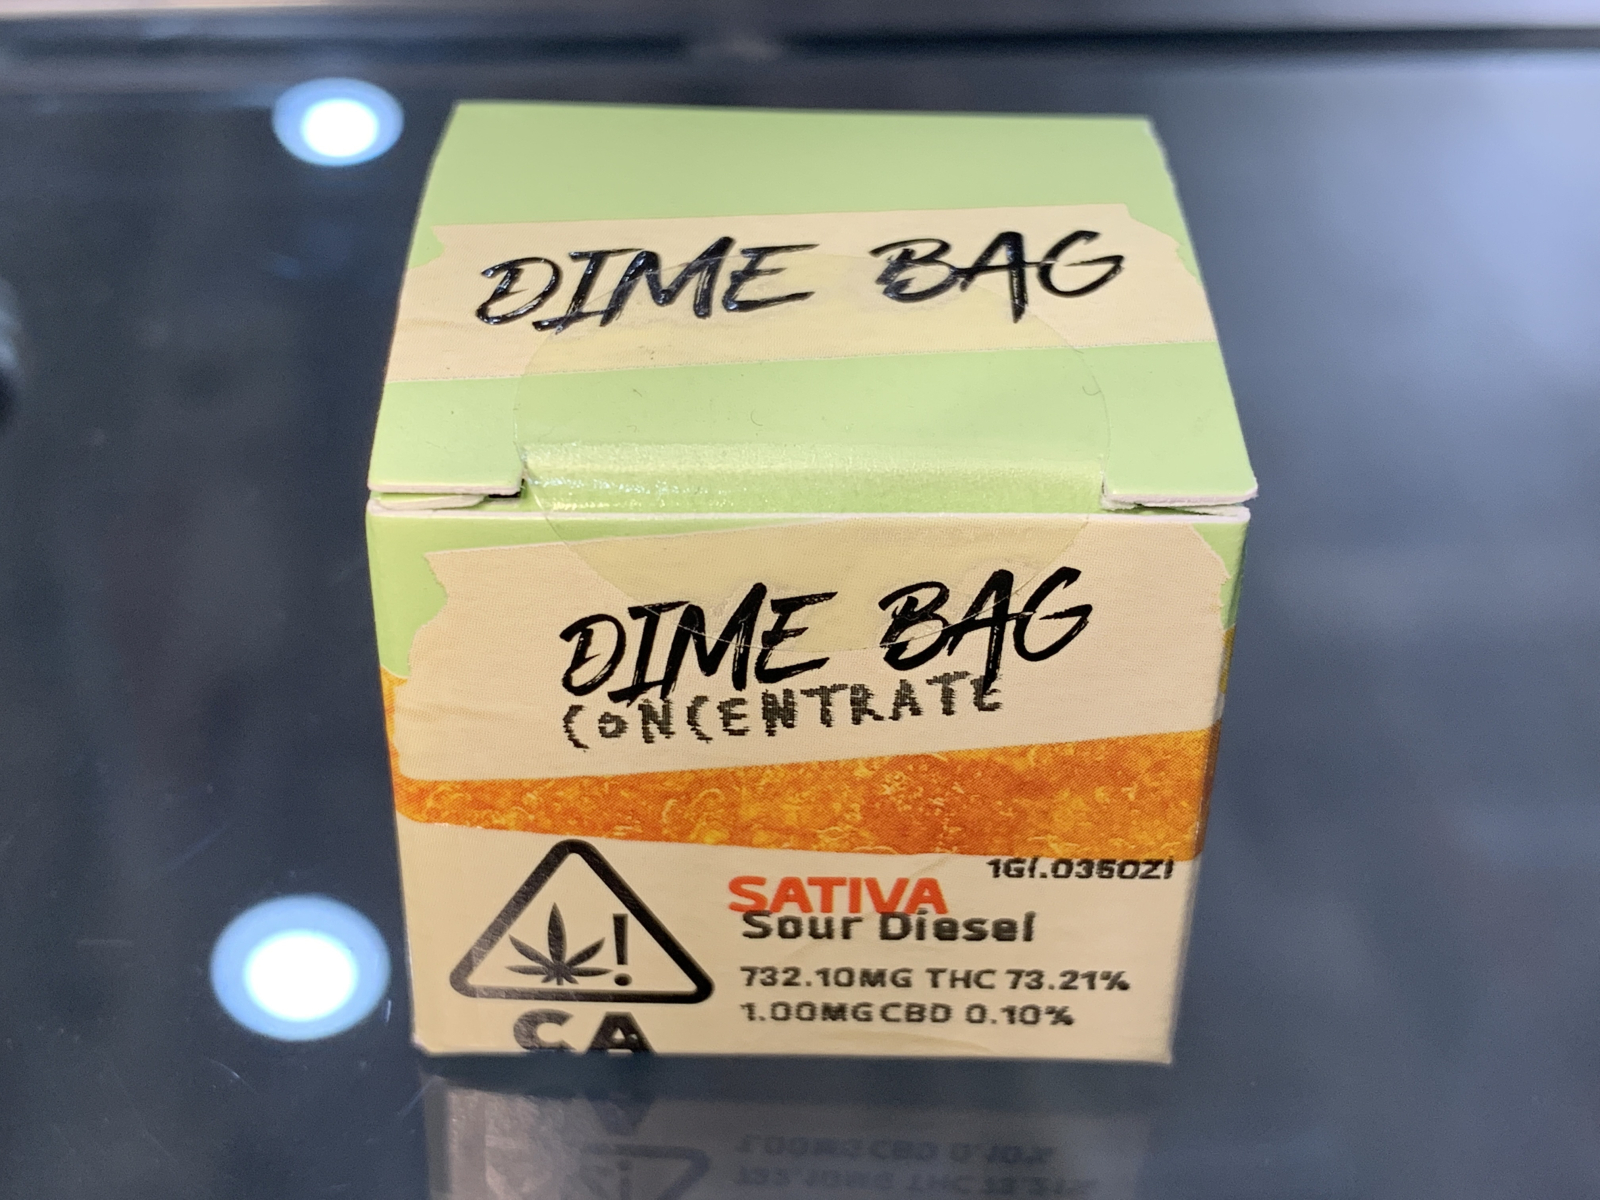 Dime Bag sour diesel 1 gram concentrate